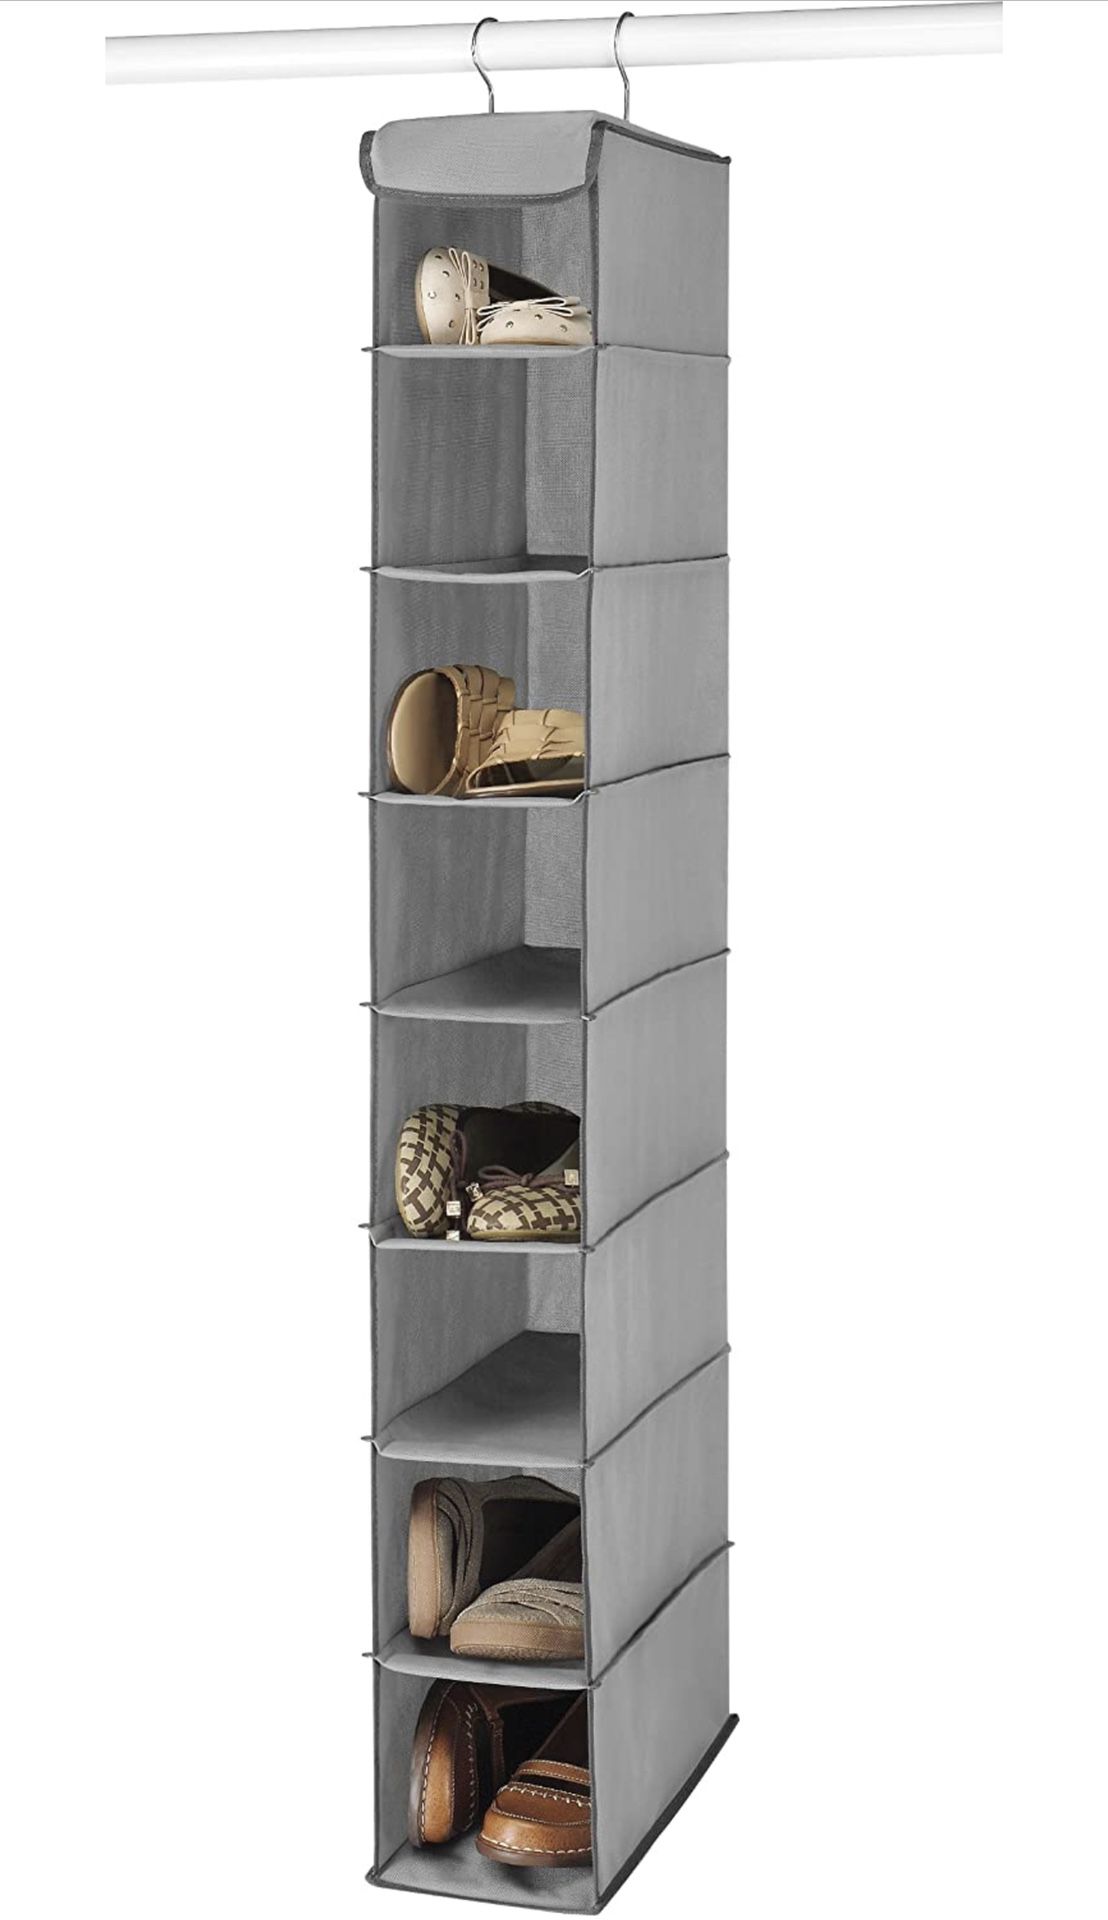 Hanging Shoe Shelves - 8 Section - Closet Organizer - Grey